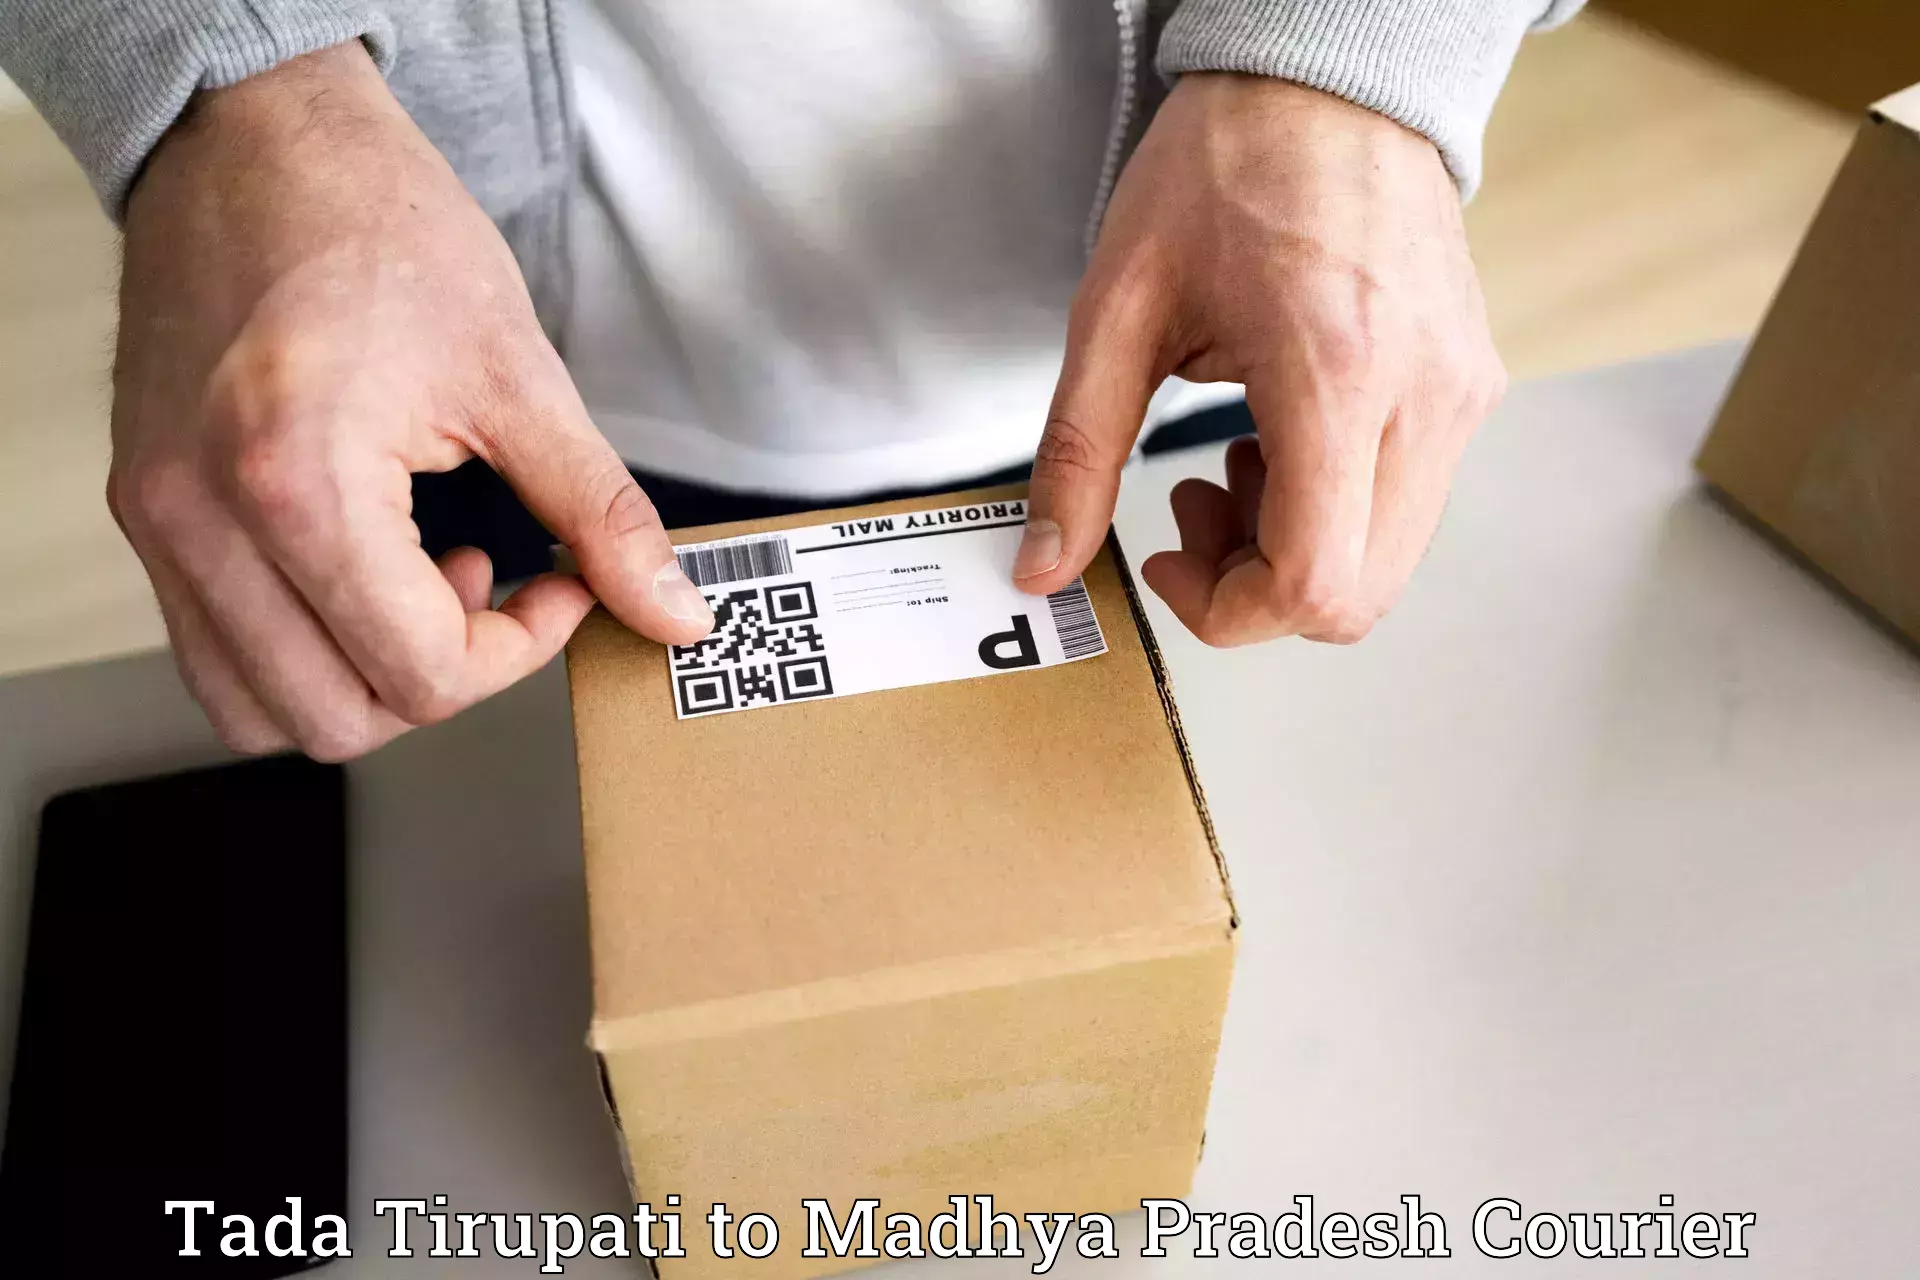 Advanced shipping network Tada Tirupati to Indore